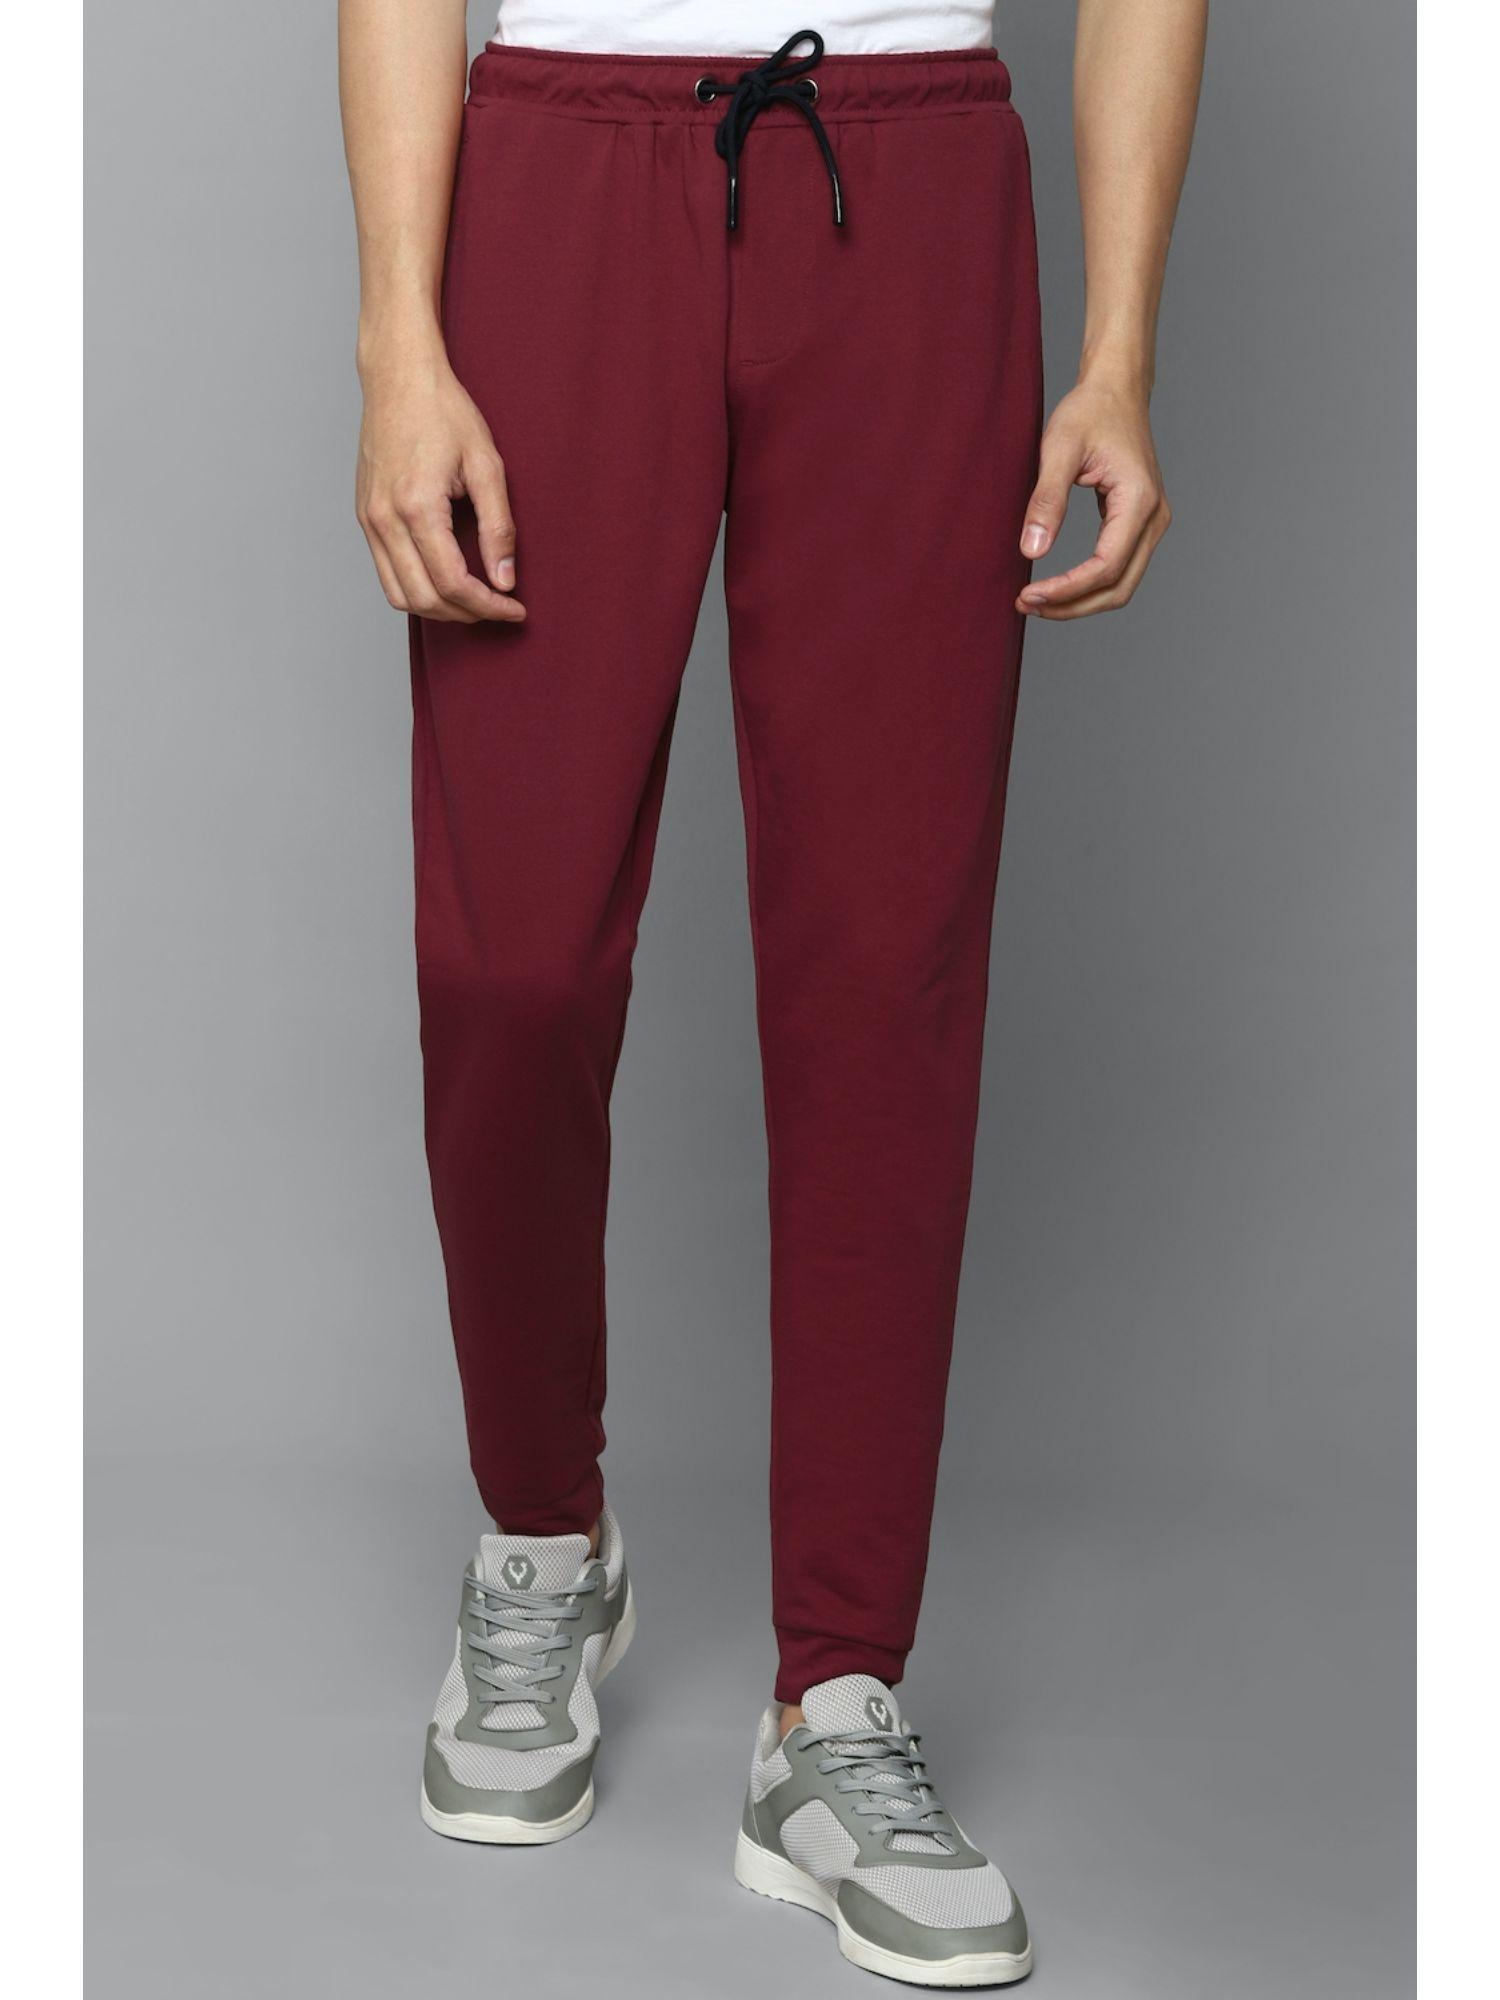 maroon-joggers-pants